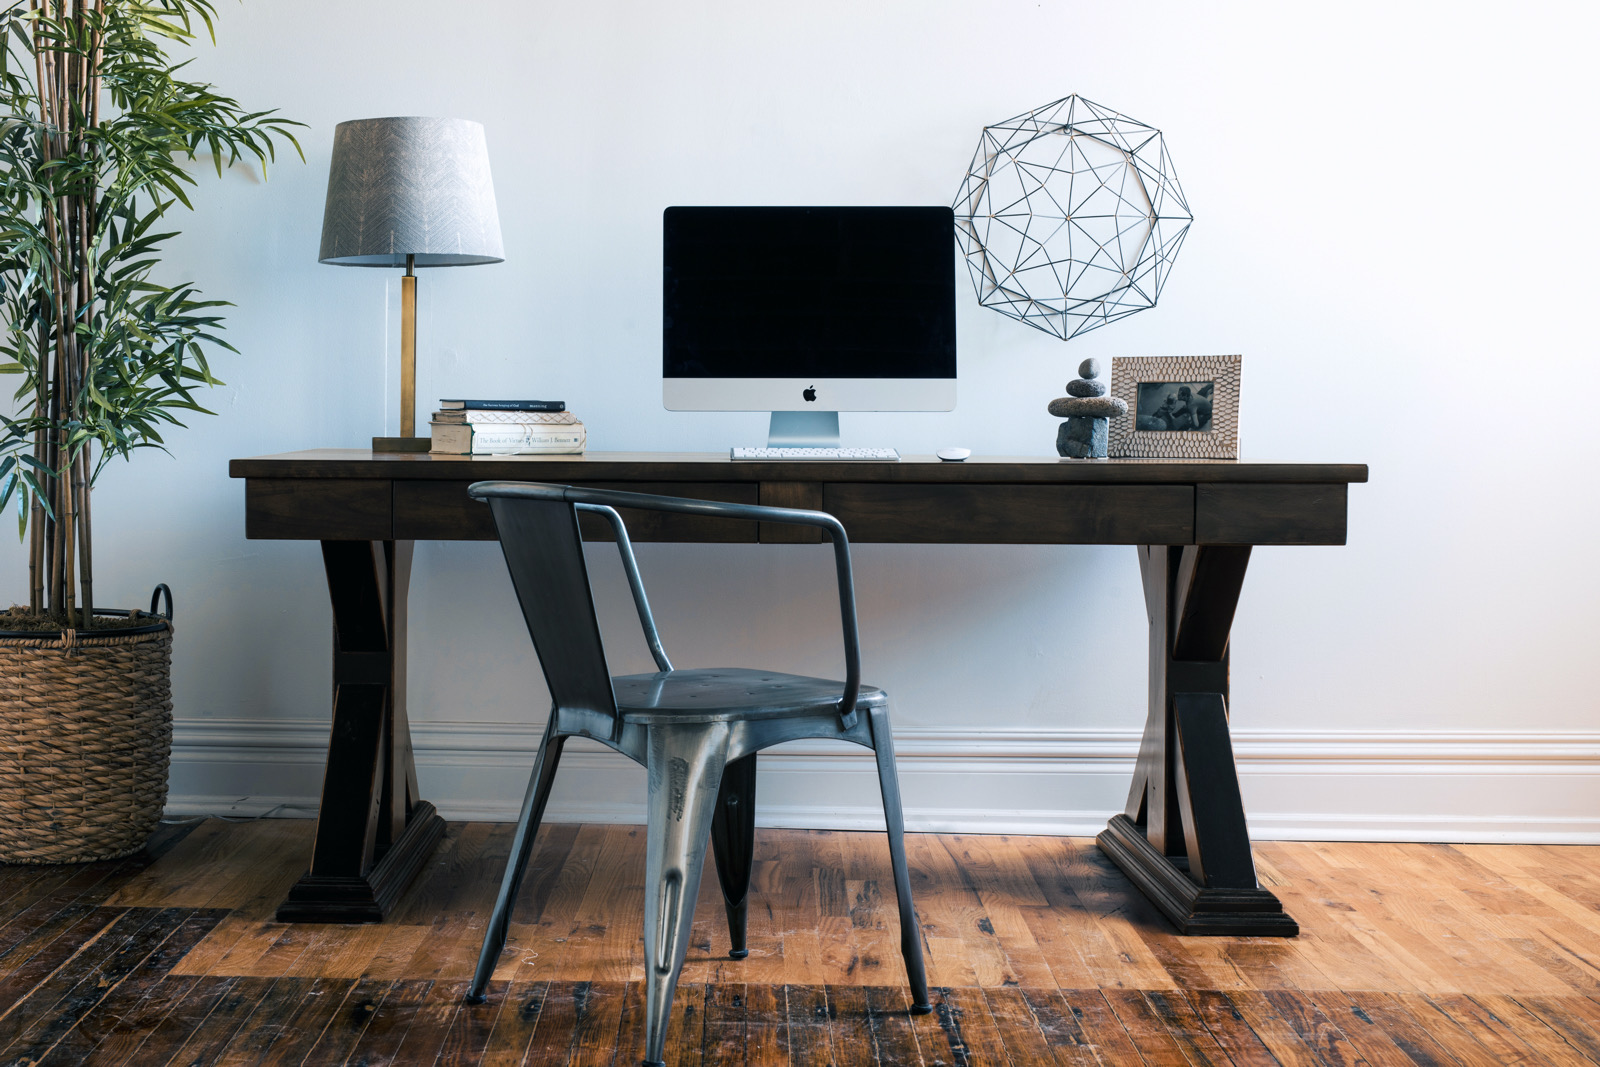 Belmont Desk | Small Pedestal Desks in Home Office Furniture and Decor